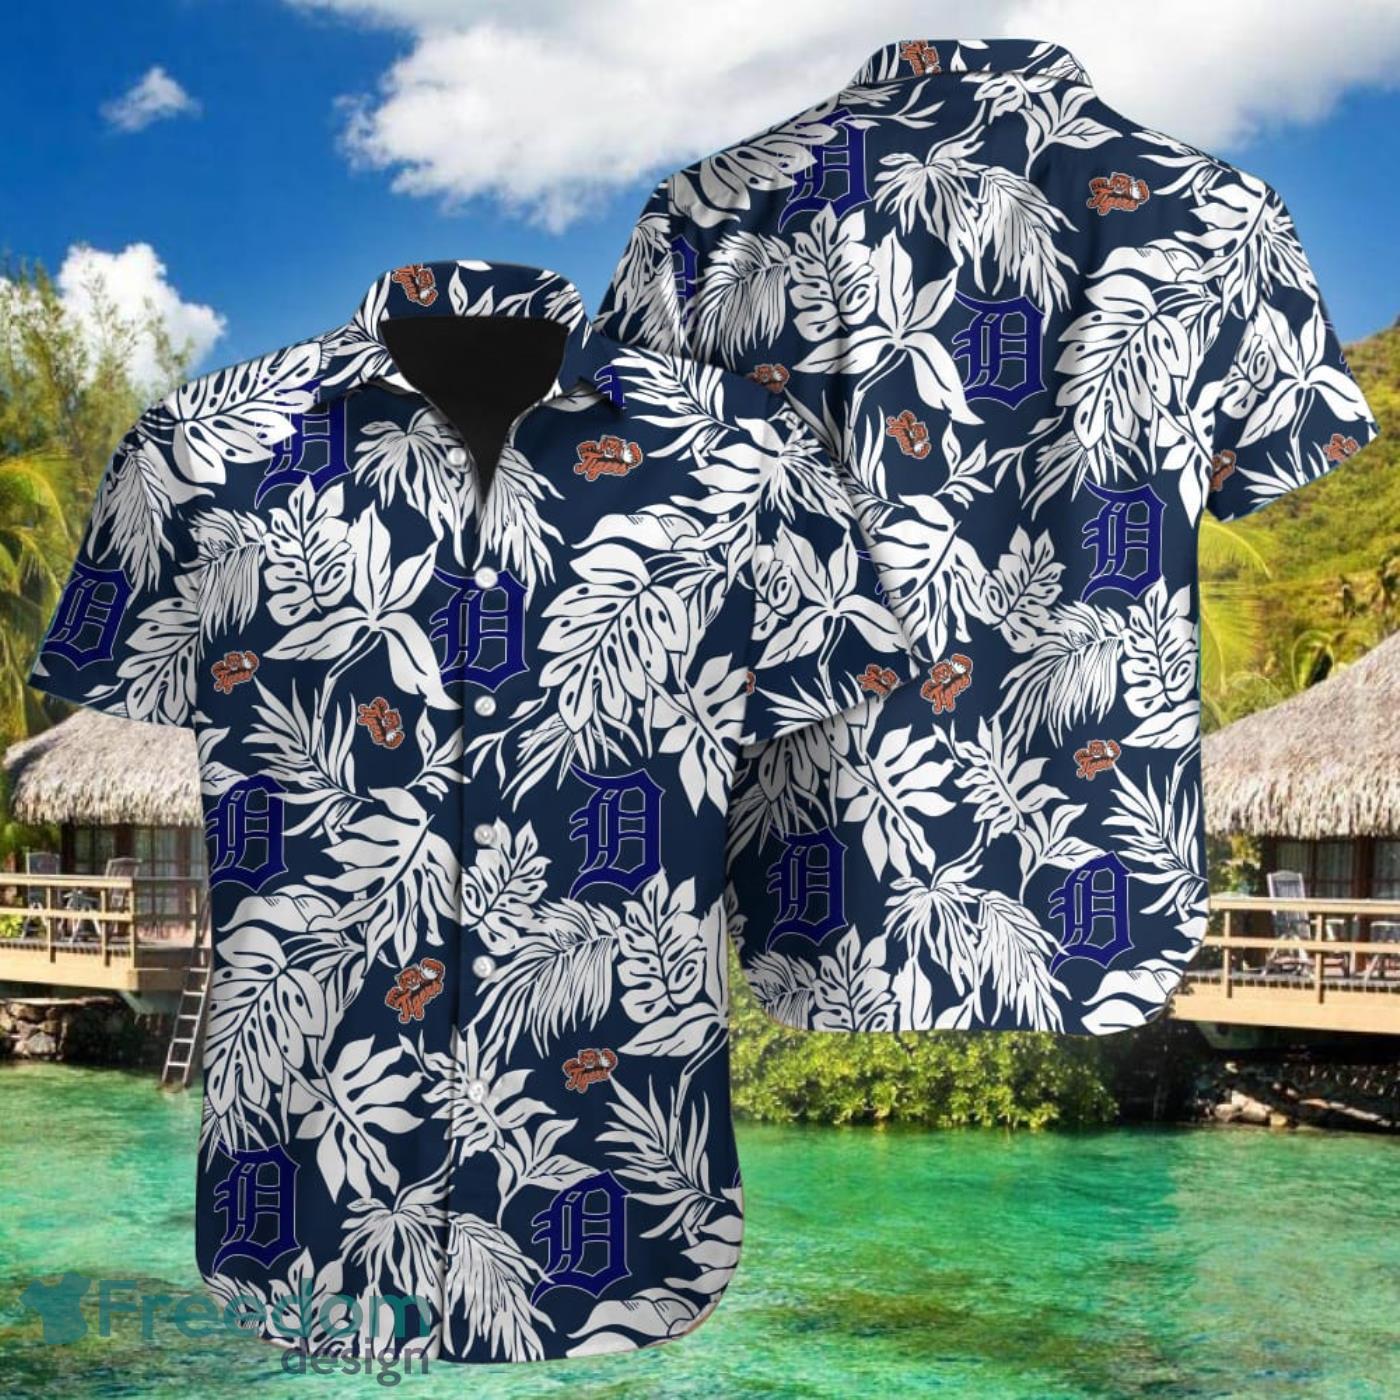 Tropical Style Edmonton Oilers National Hockey League 2023 Summer Gift  Aloha Hawaiian Shirt - Freedomdesign